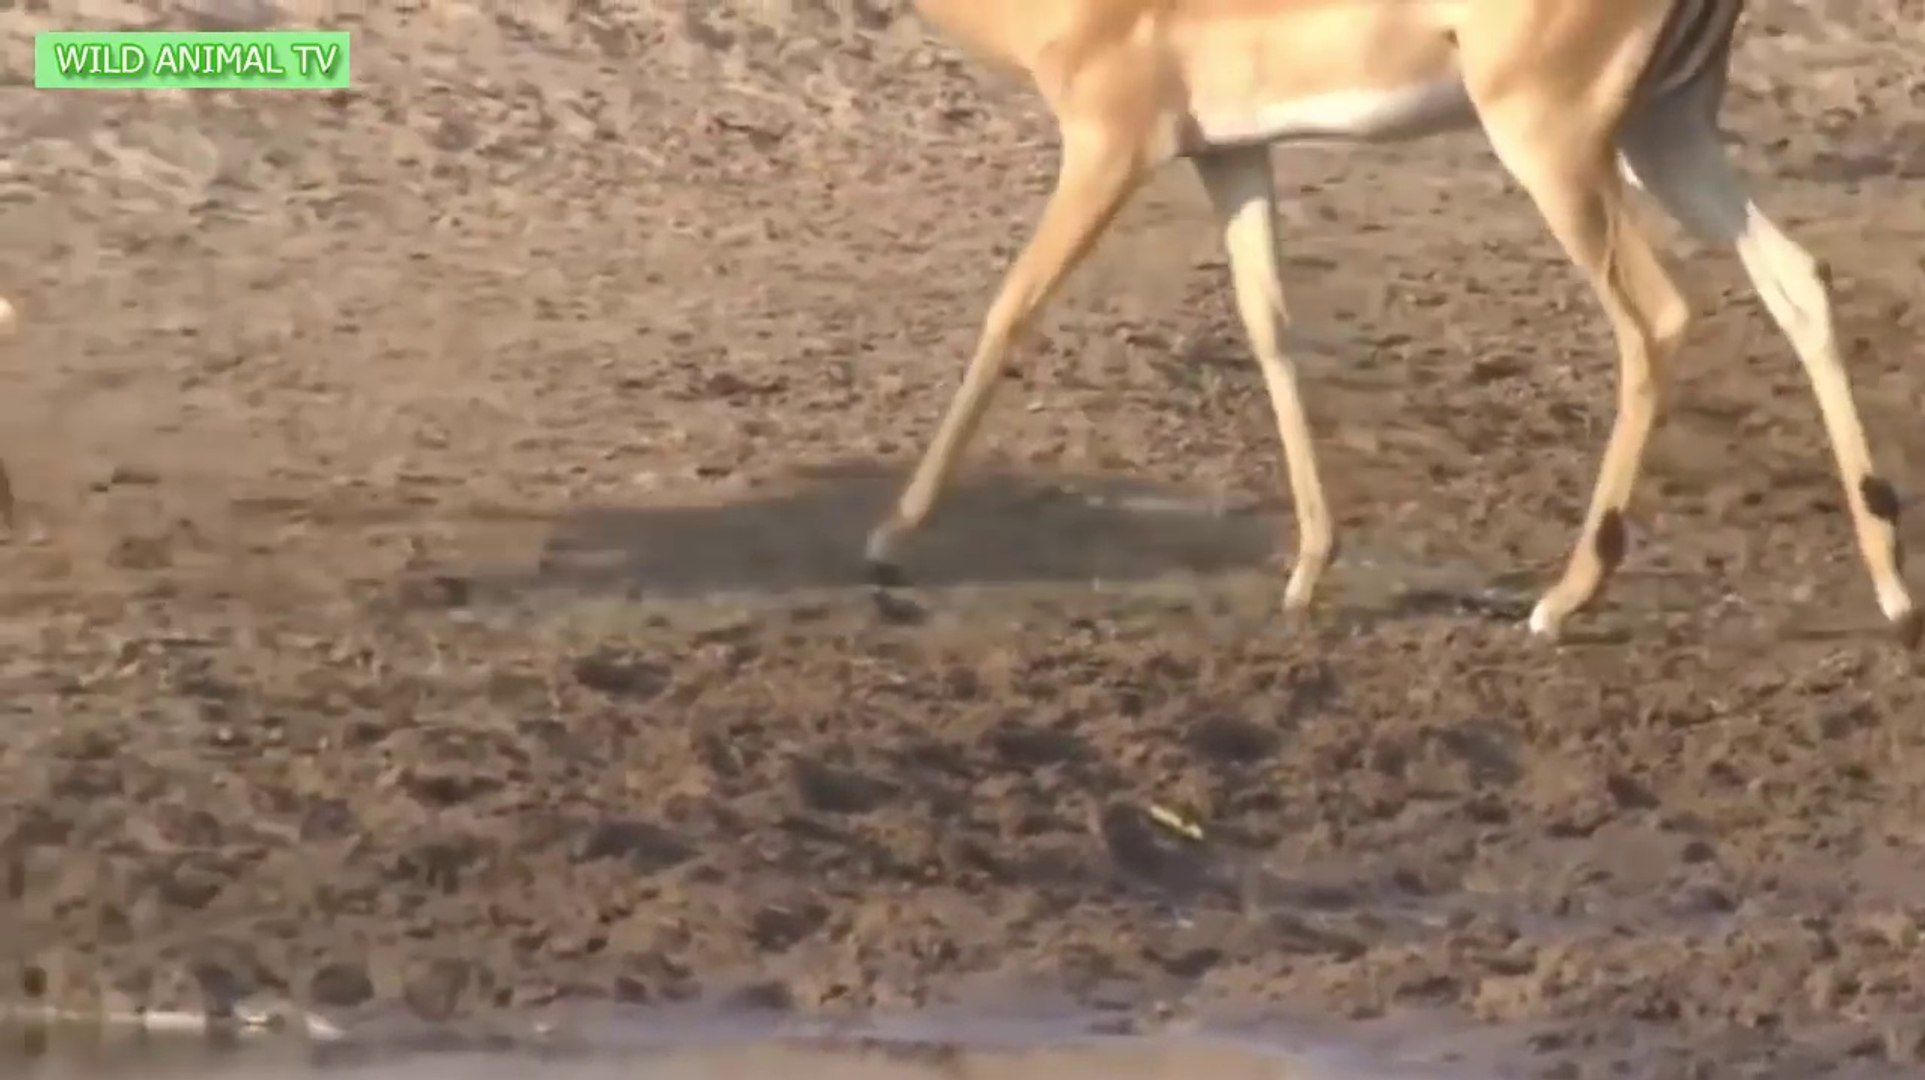 Amazing Animals Attacks In Real Life # Corodile kills Antelope vs 5 Lions attacks Deer - P